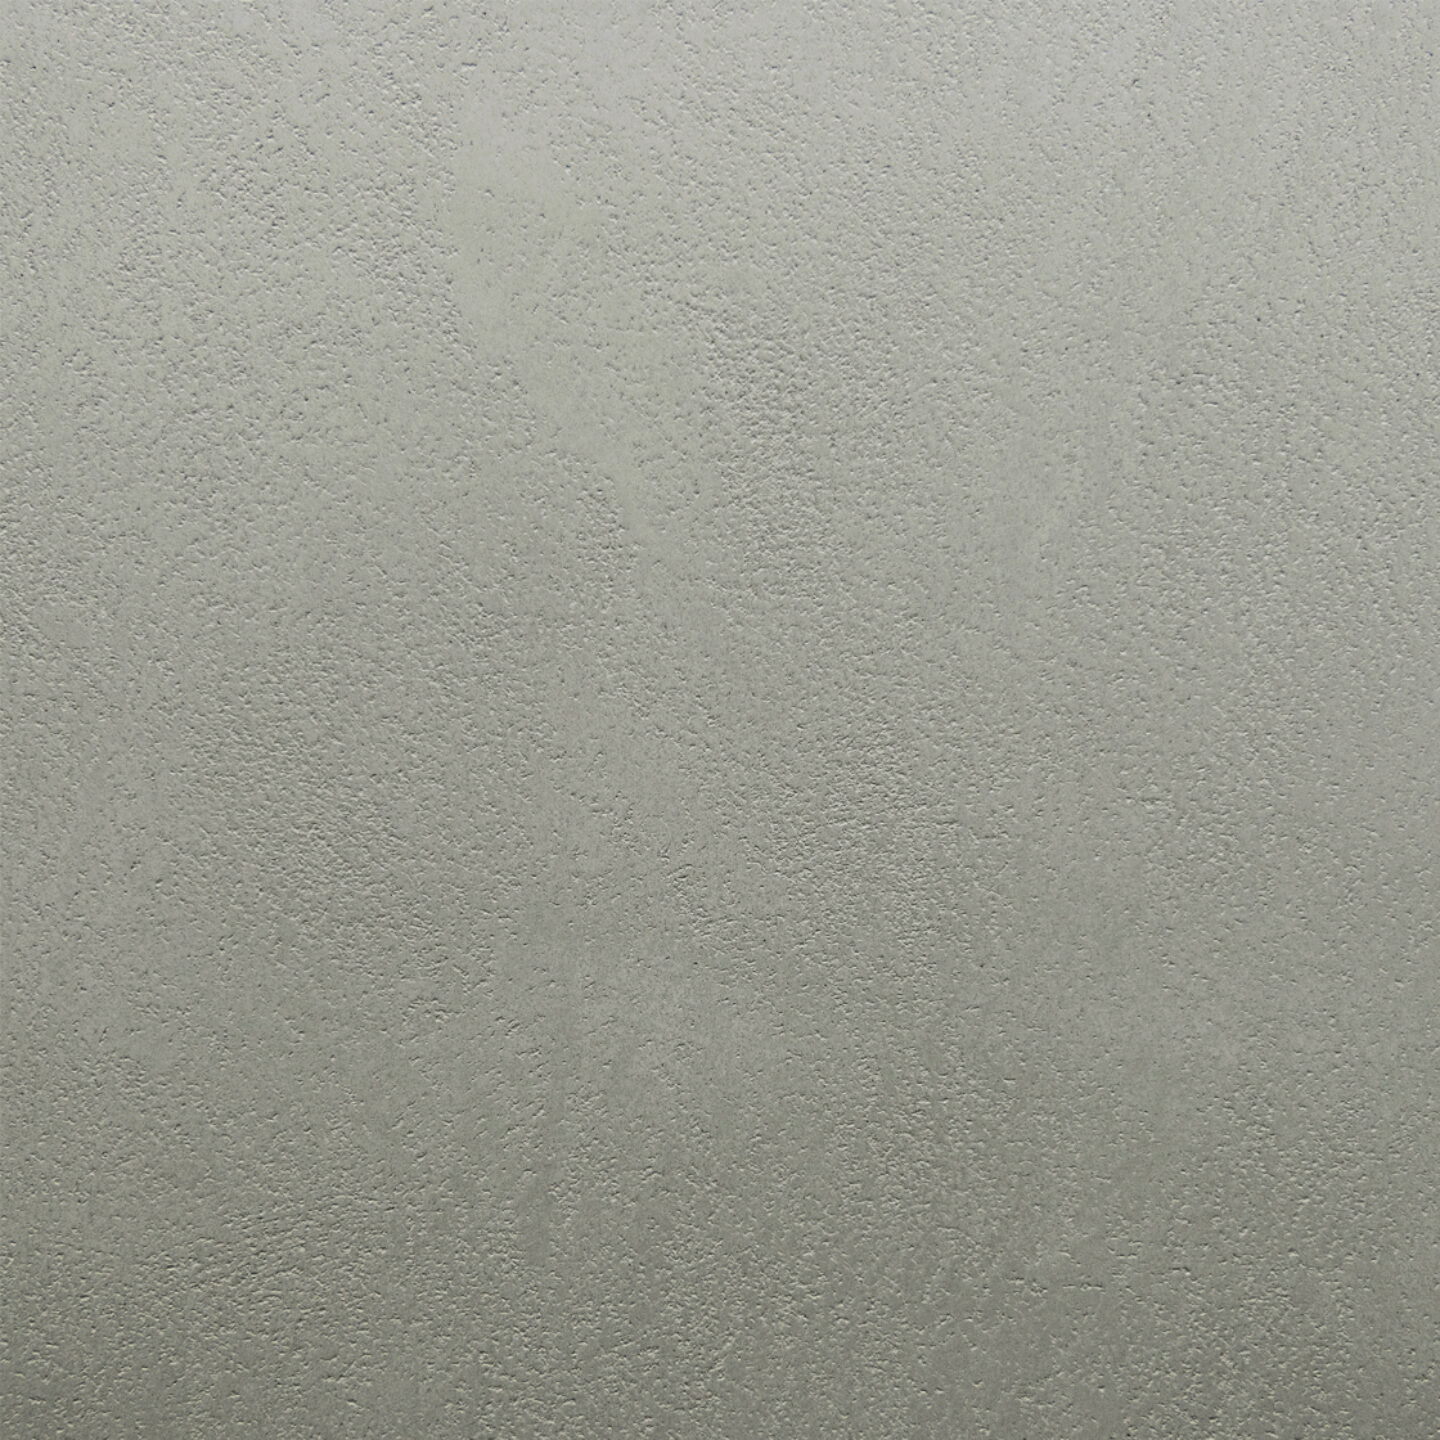 Close up of Armourcoat leatherstone exterior polished plaster finish - 71